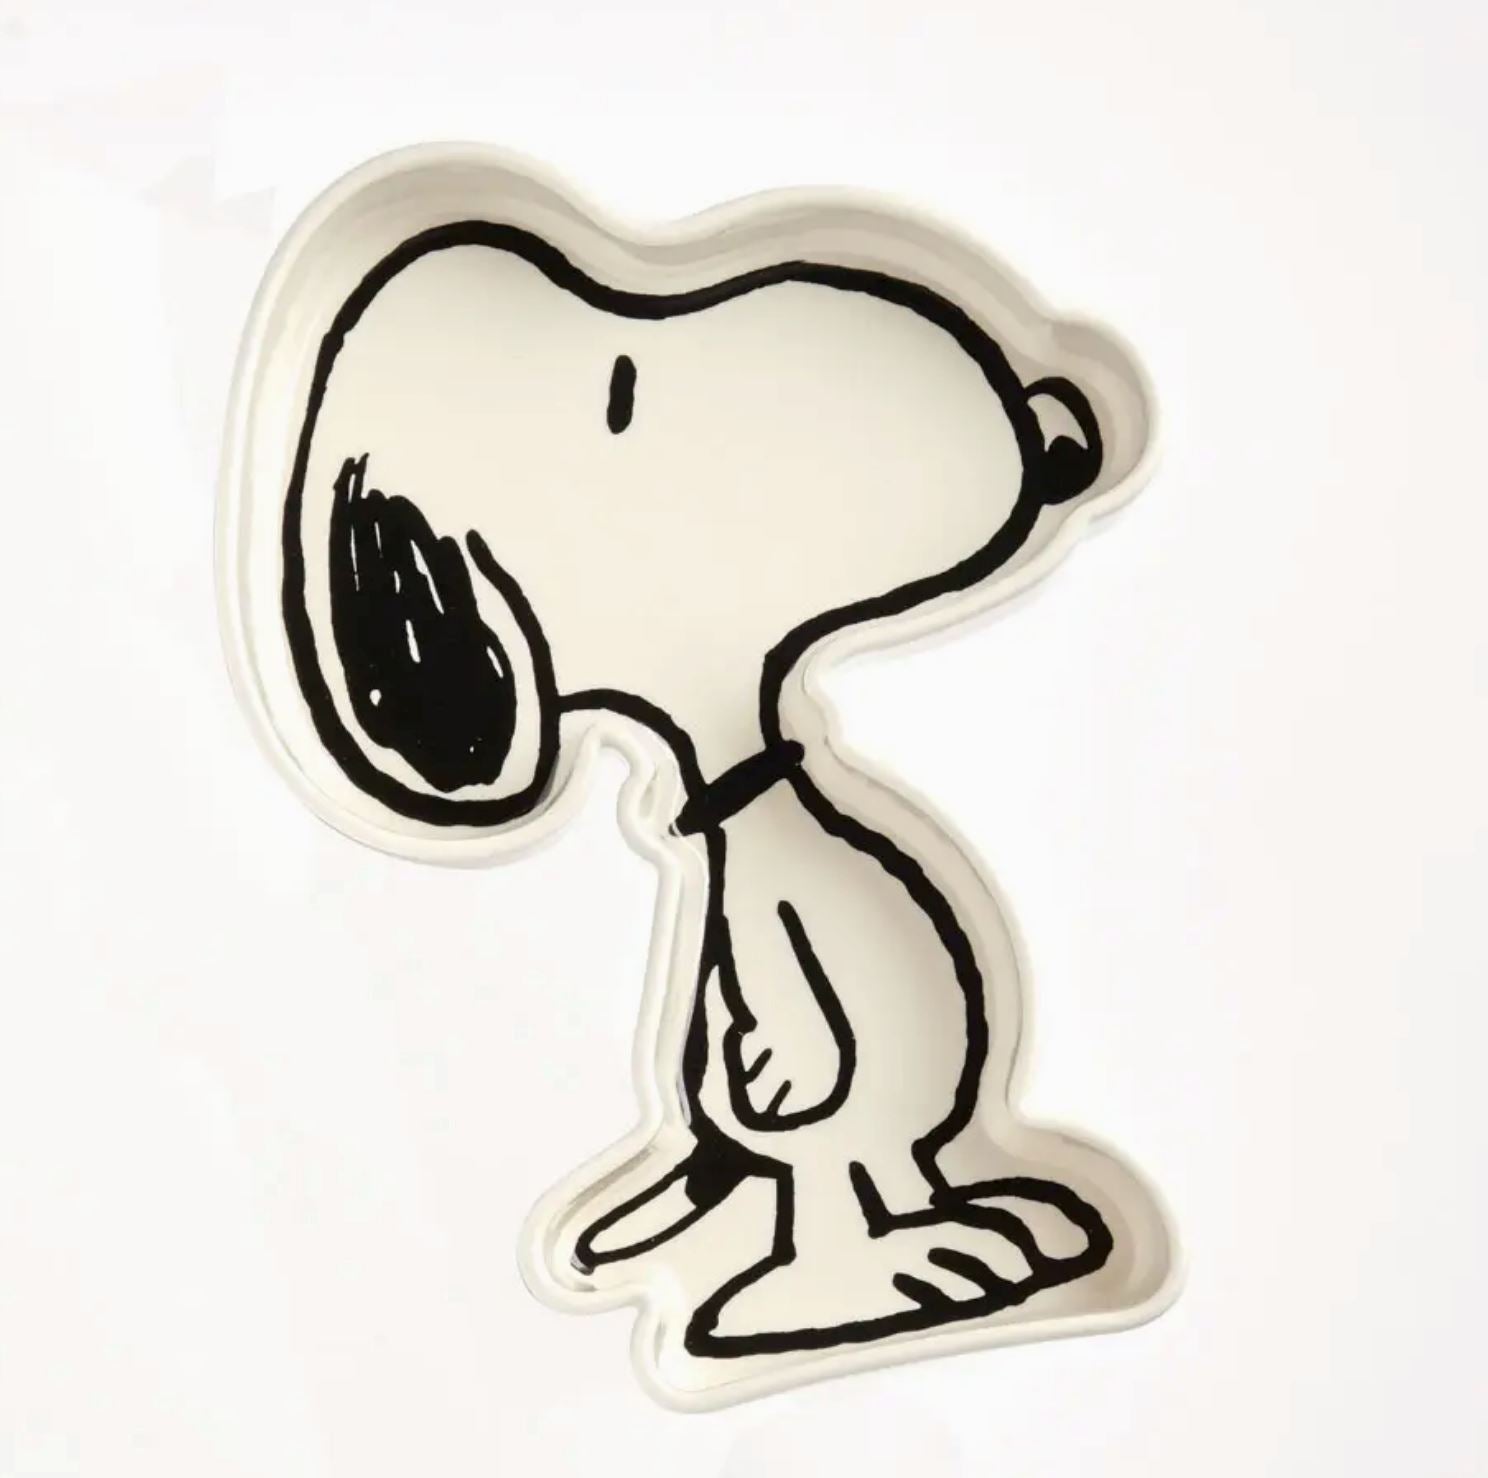 Peanuts Snoopy Trinket Tray x Magpie - Third Drawer Down